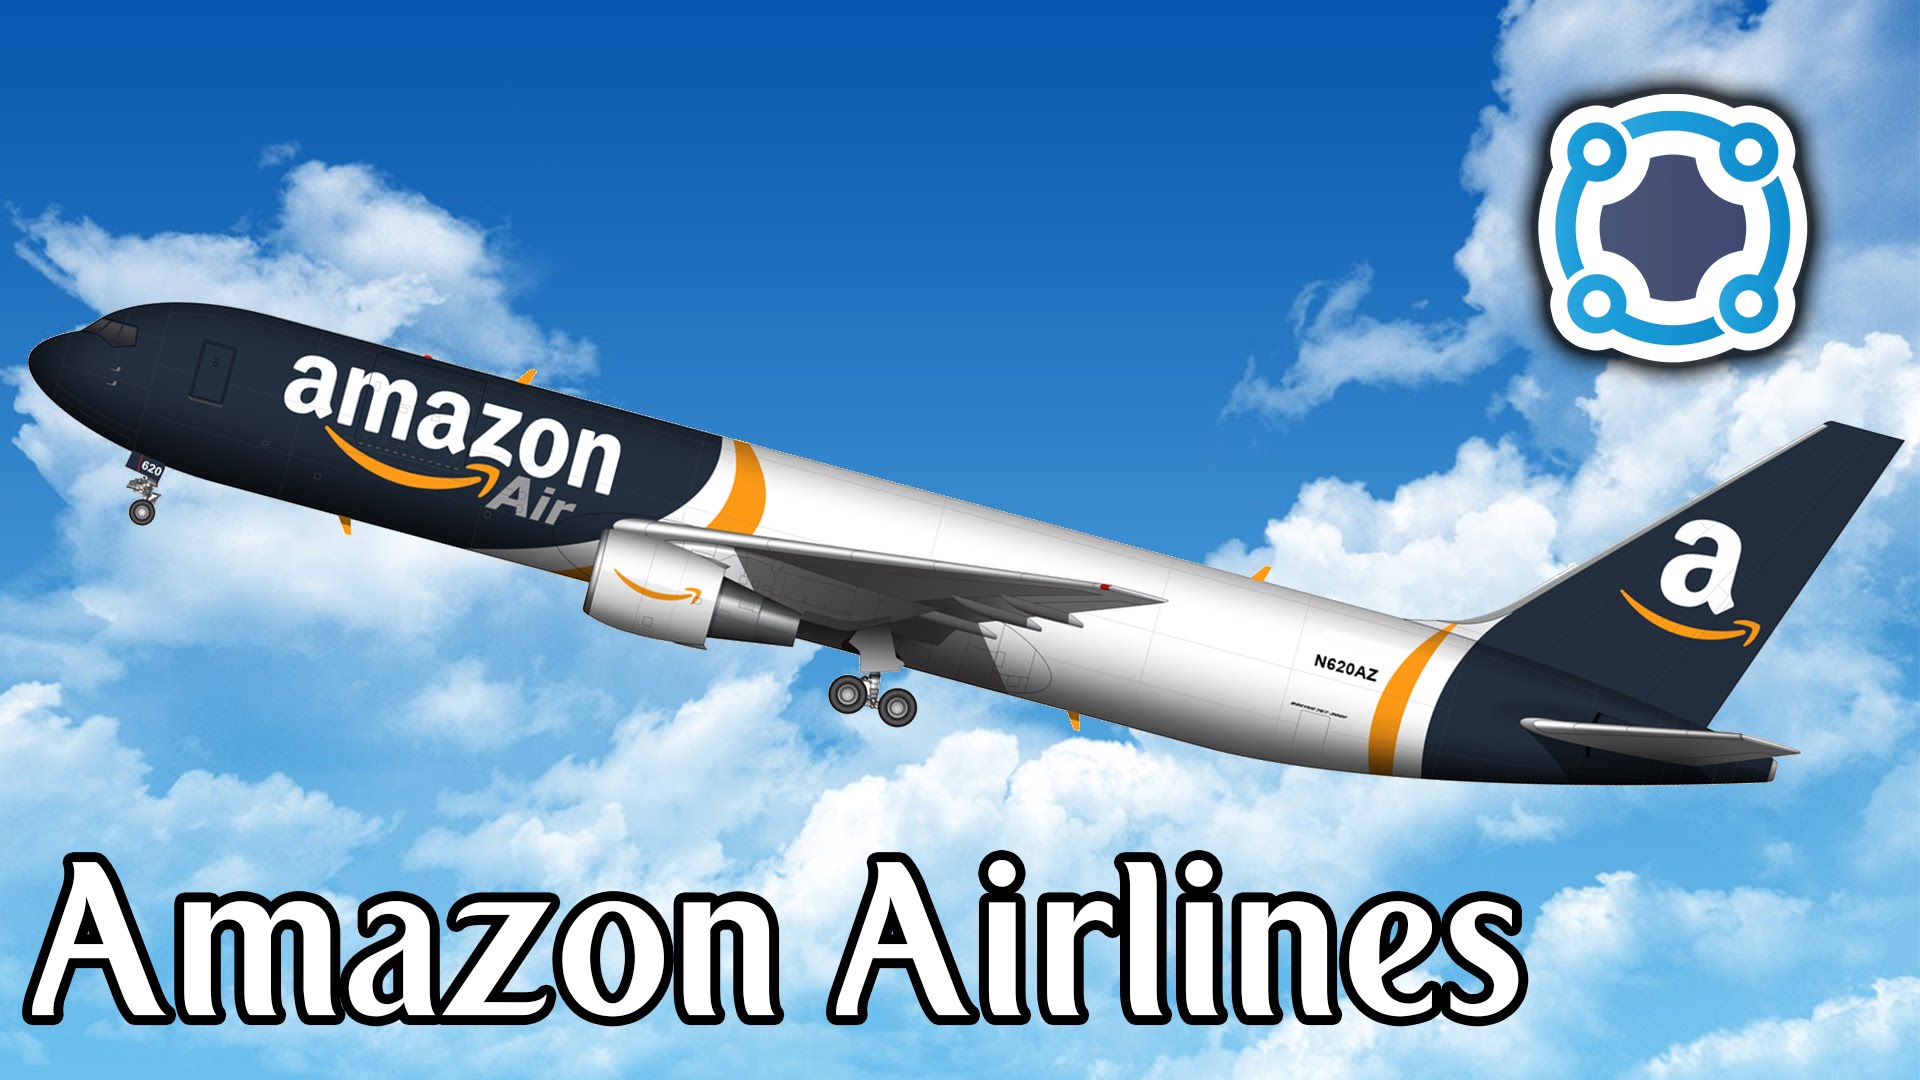 Amazon Starts Their Own Airline